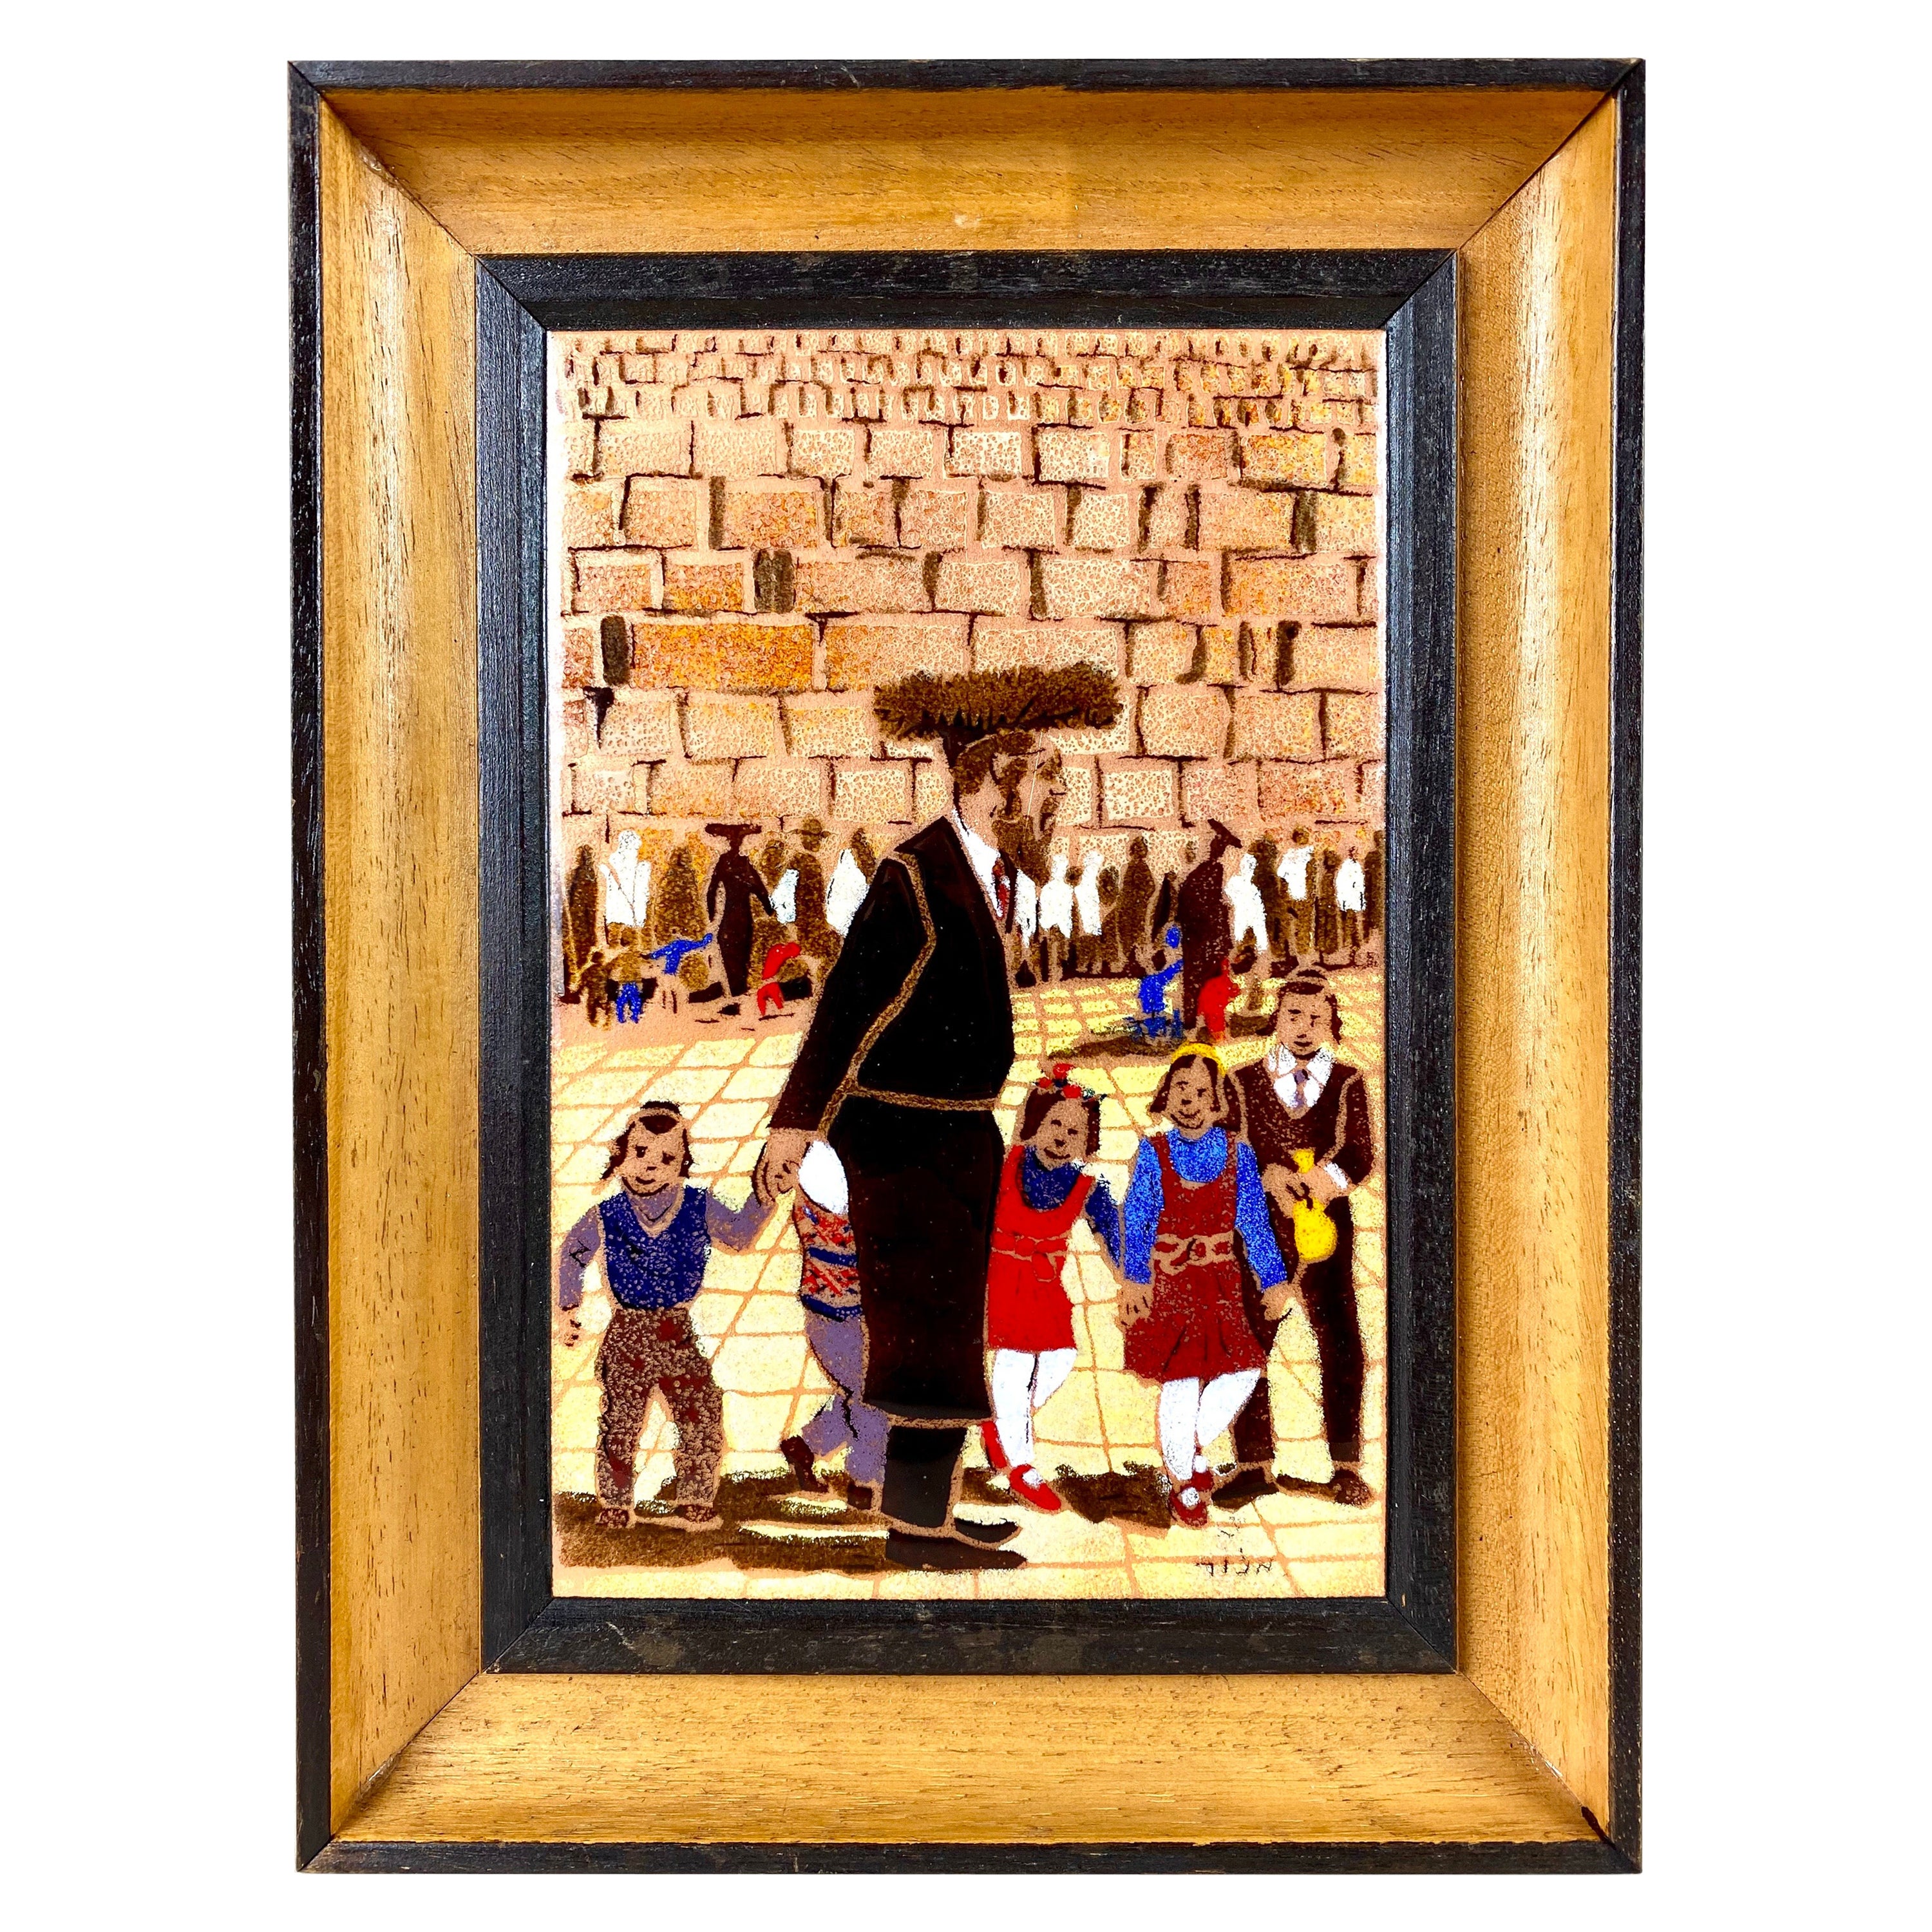 Mid Century Enamel Painting, "At The Wailing Wall", Jerusalem, ca. 1950, Signed